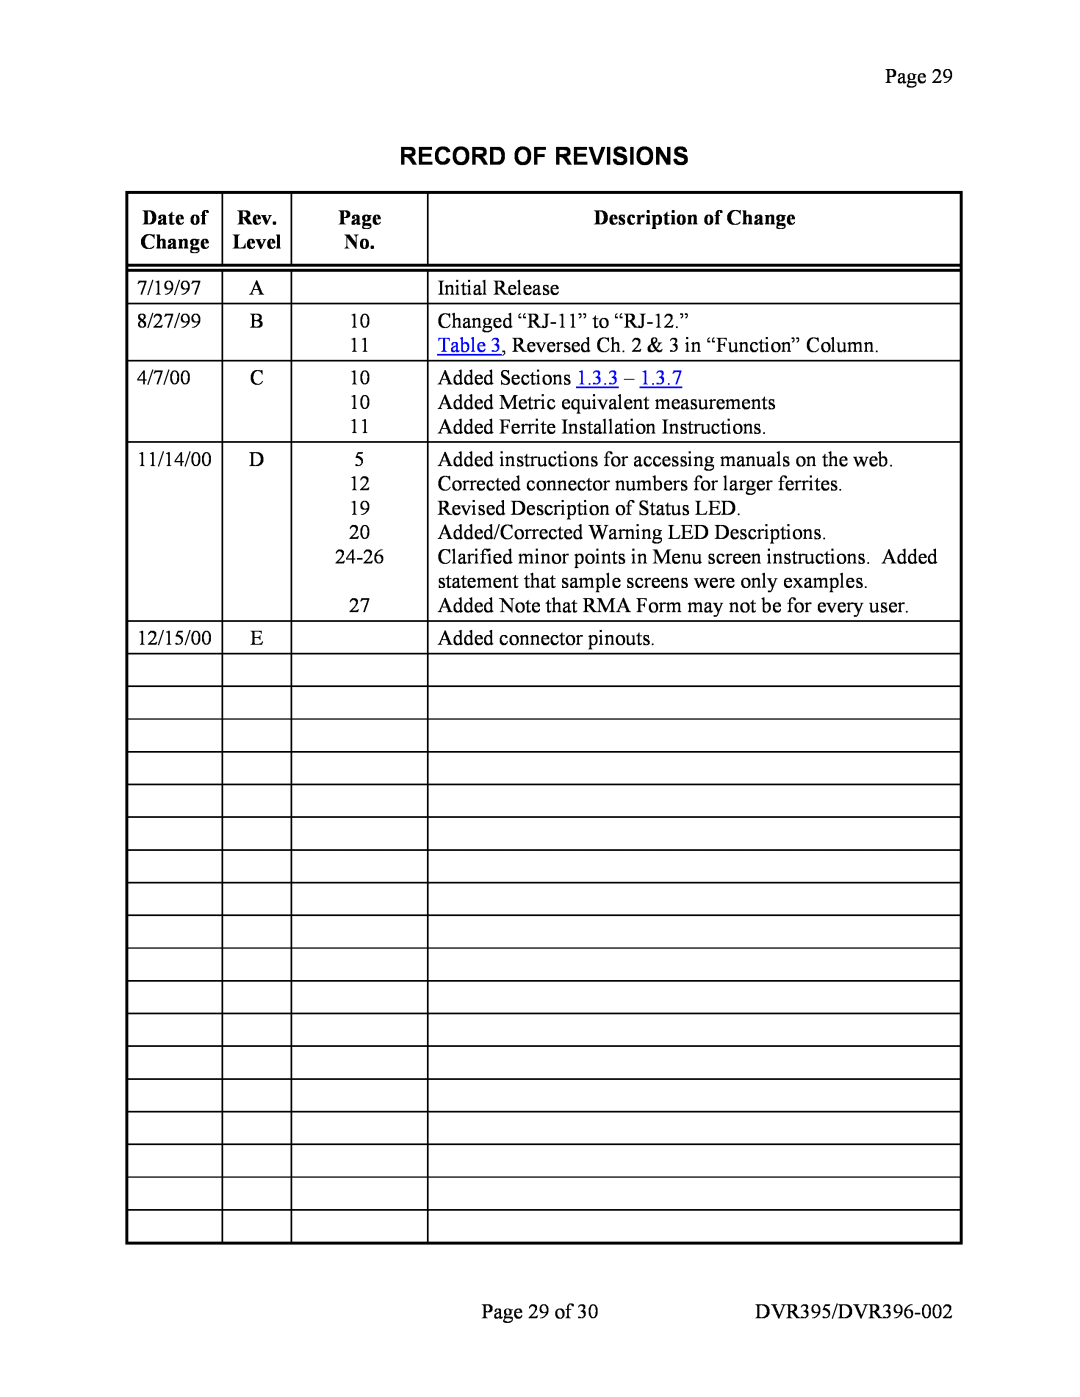 Wegener Communications DVR395, DVR396 manual Record Of Revisions, Date of Change, Rev Level, Page No, Description of Change 